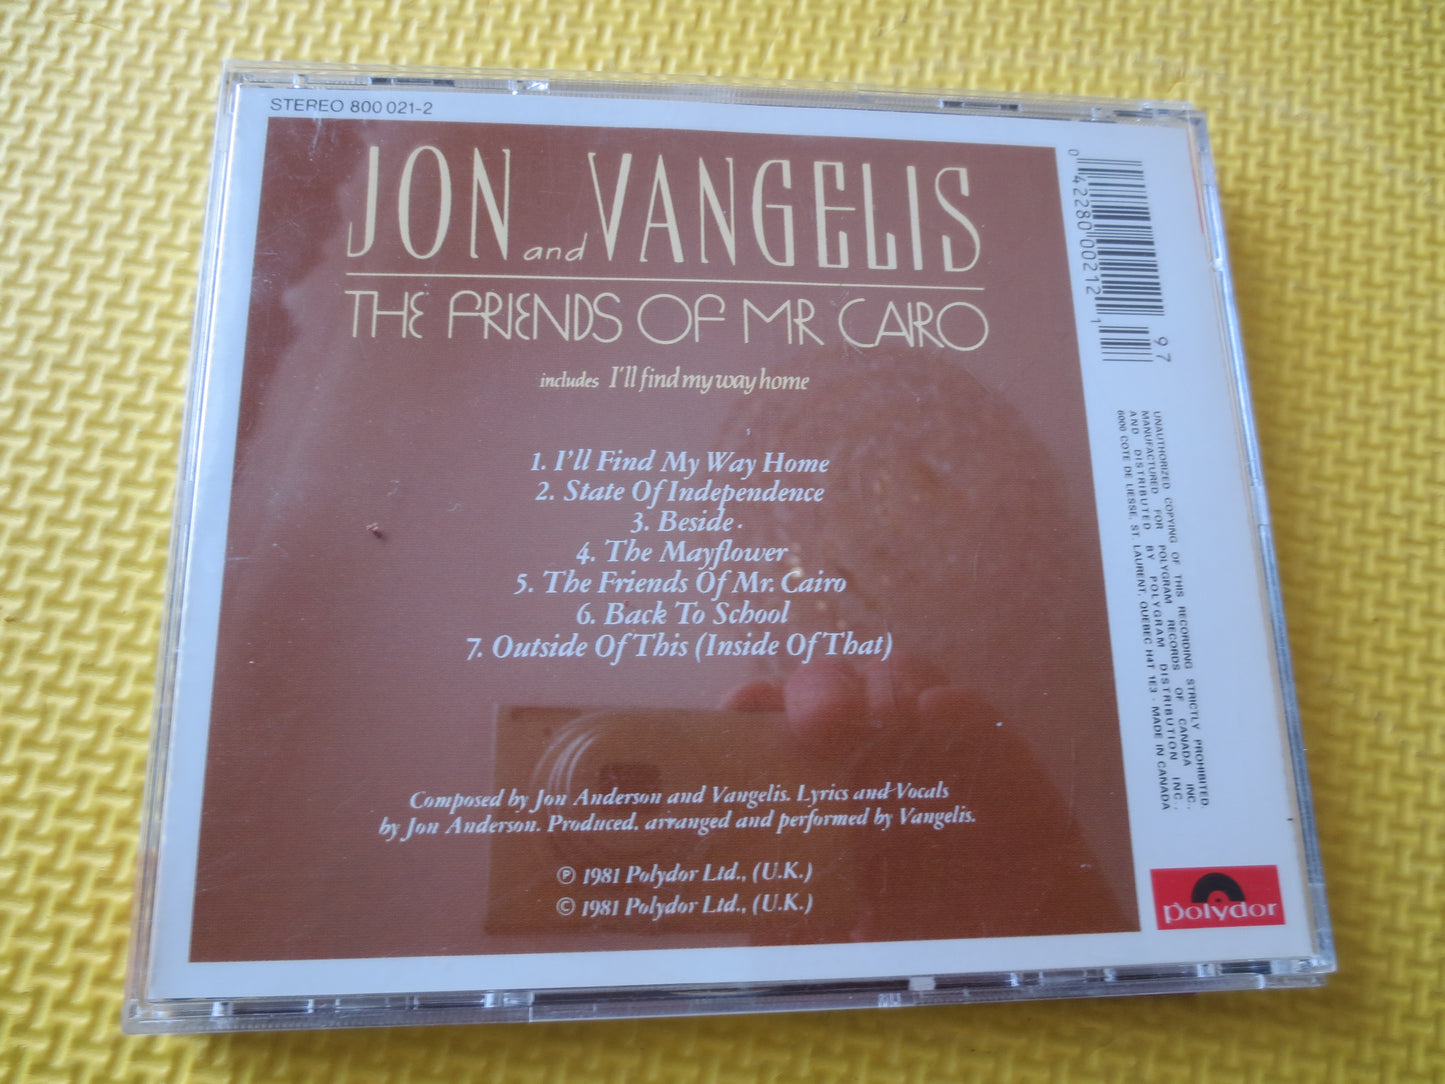 JON and VANGELIS, FRIENDS of Mr Cairo, Jon and Vangelis Cd, Music Cd, Cd Music, Rock Music Cd, Rock Cds, cds, 1986 Compact Disc